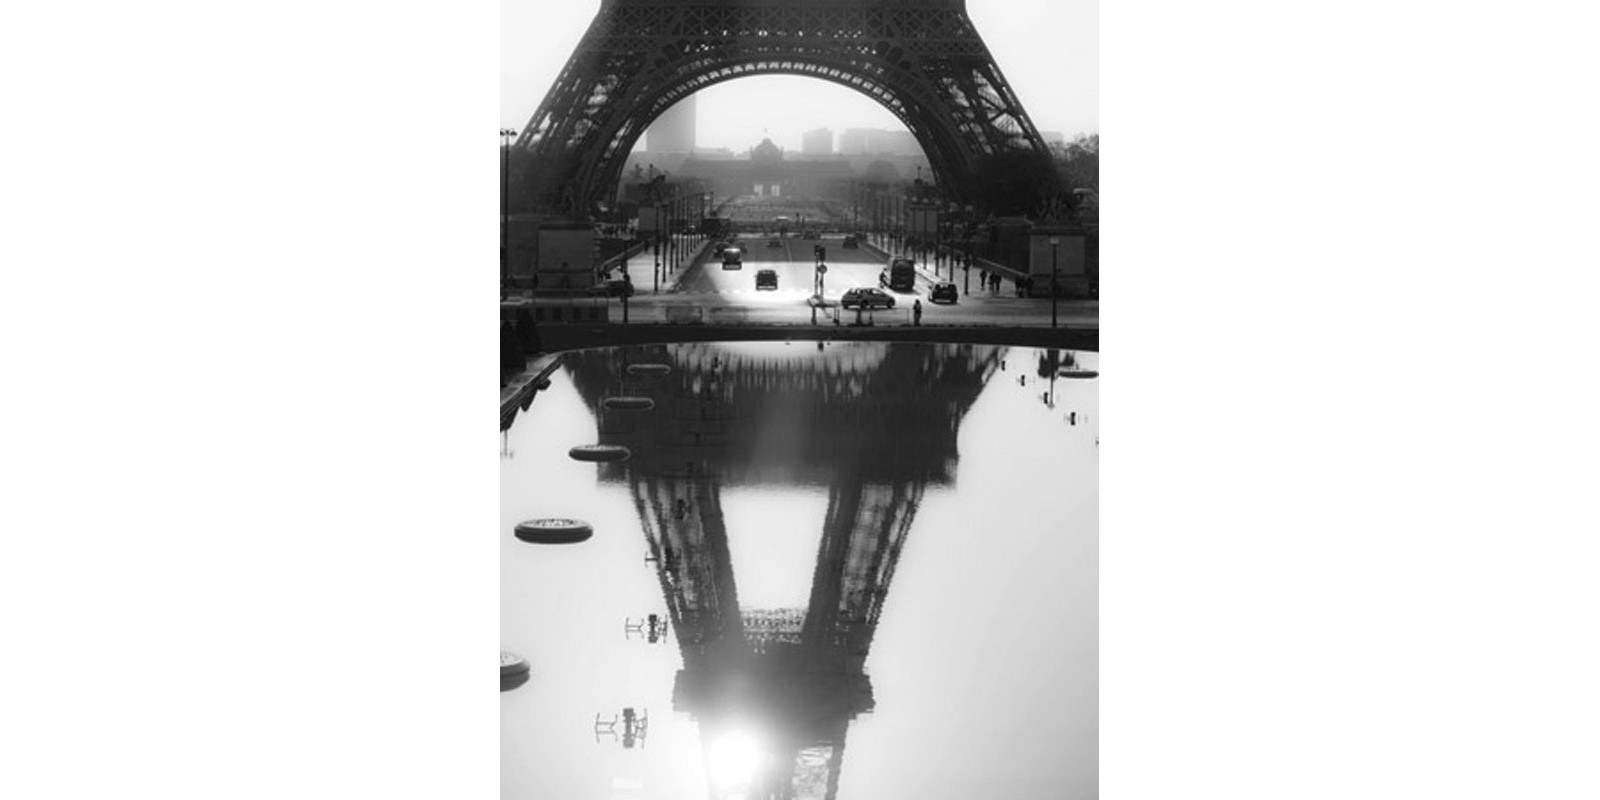 Michel Setboun - The Eiffel tower reflected, Paris